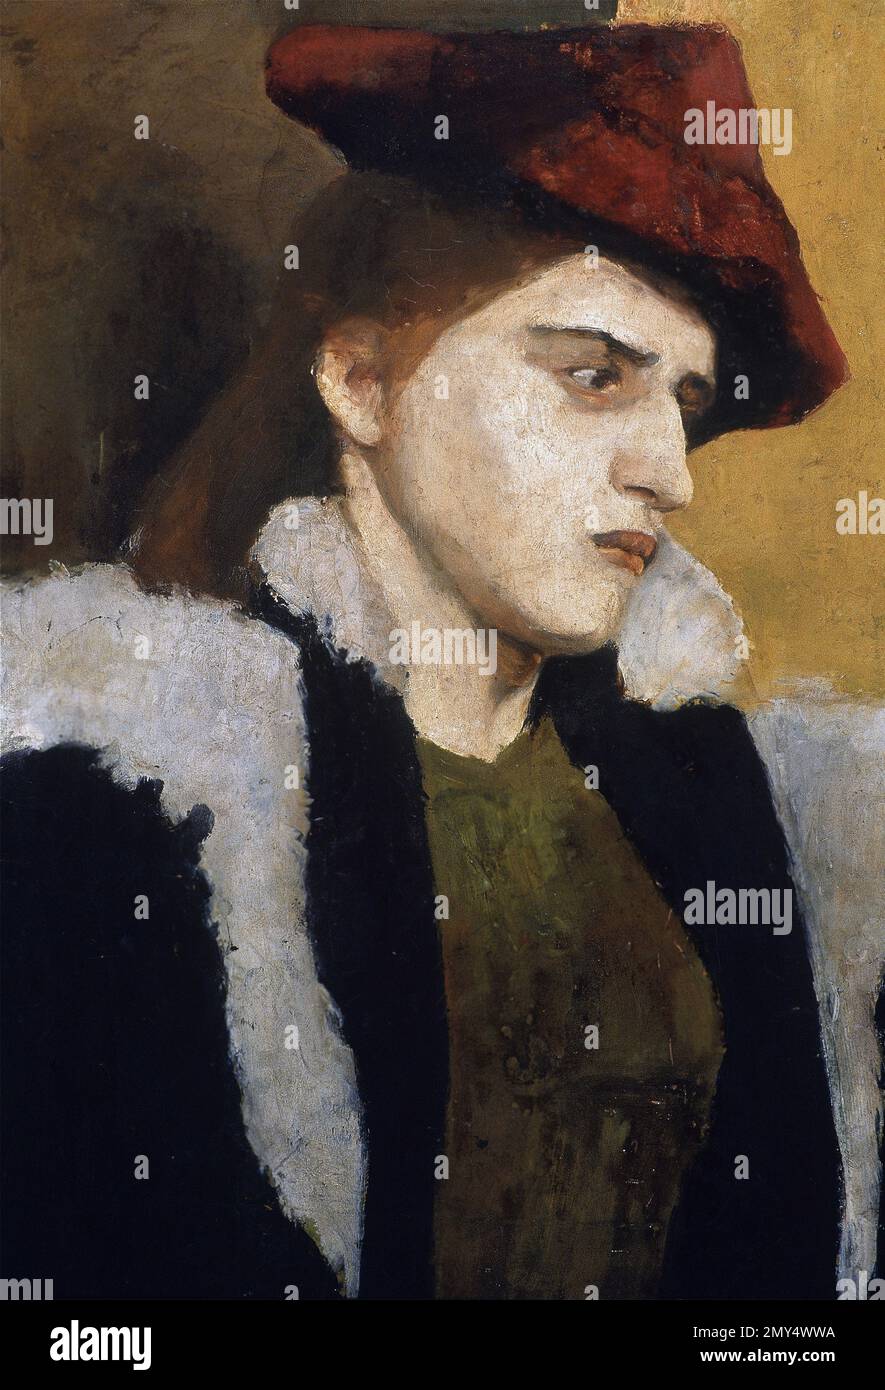 Paula Modersohn-Becker. Gemälde mit dem Titel "Portrait of a Young Woman with Red hat" der deutschen Expressionistin Paula Modersohn-Becker (1876-1907), c. 1900 Stockfoto